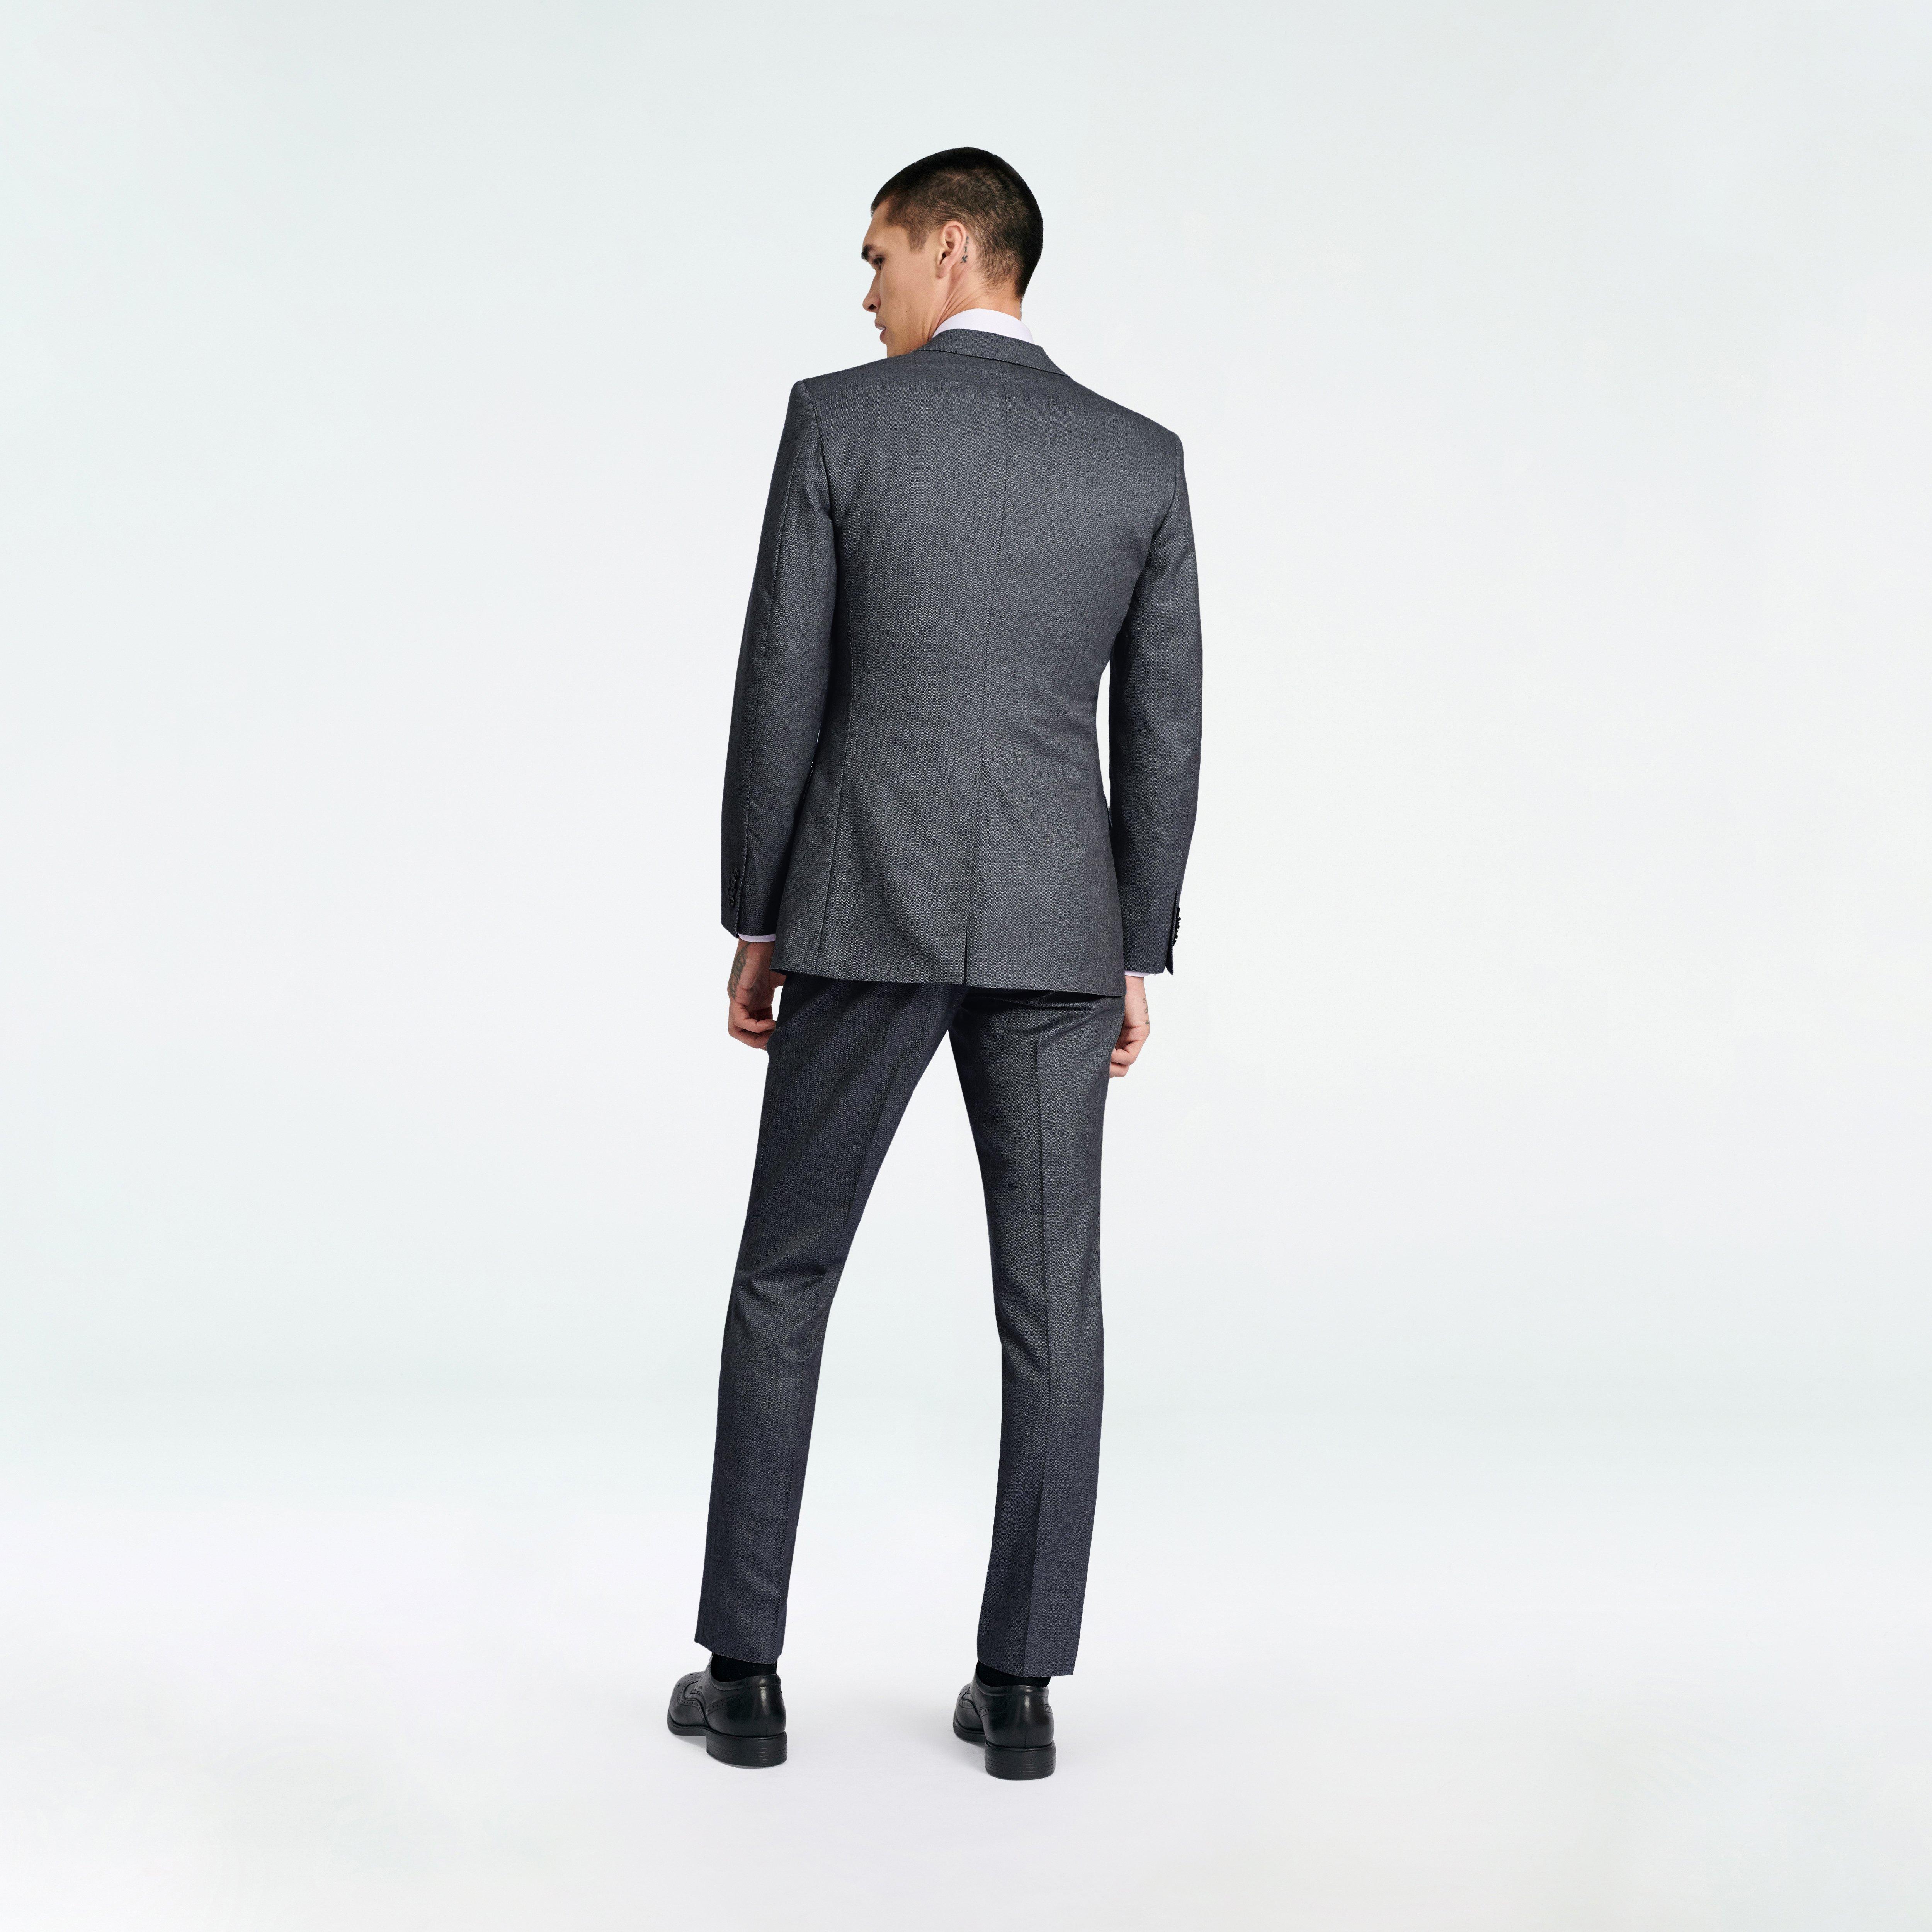 Prescot Herringbone Charcoal Suit